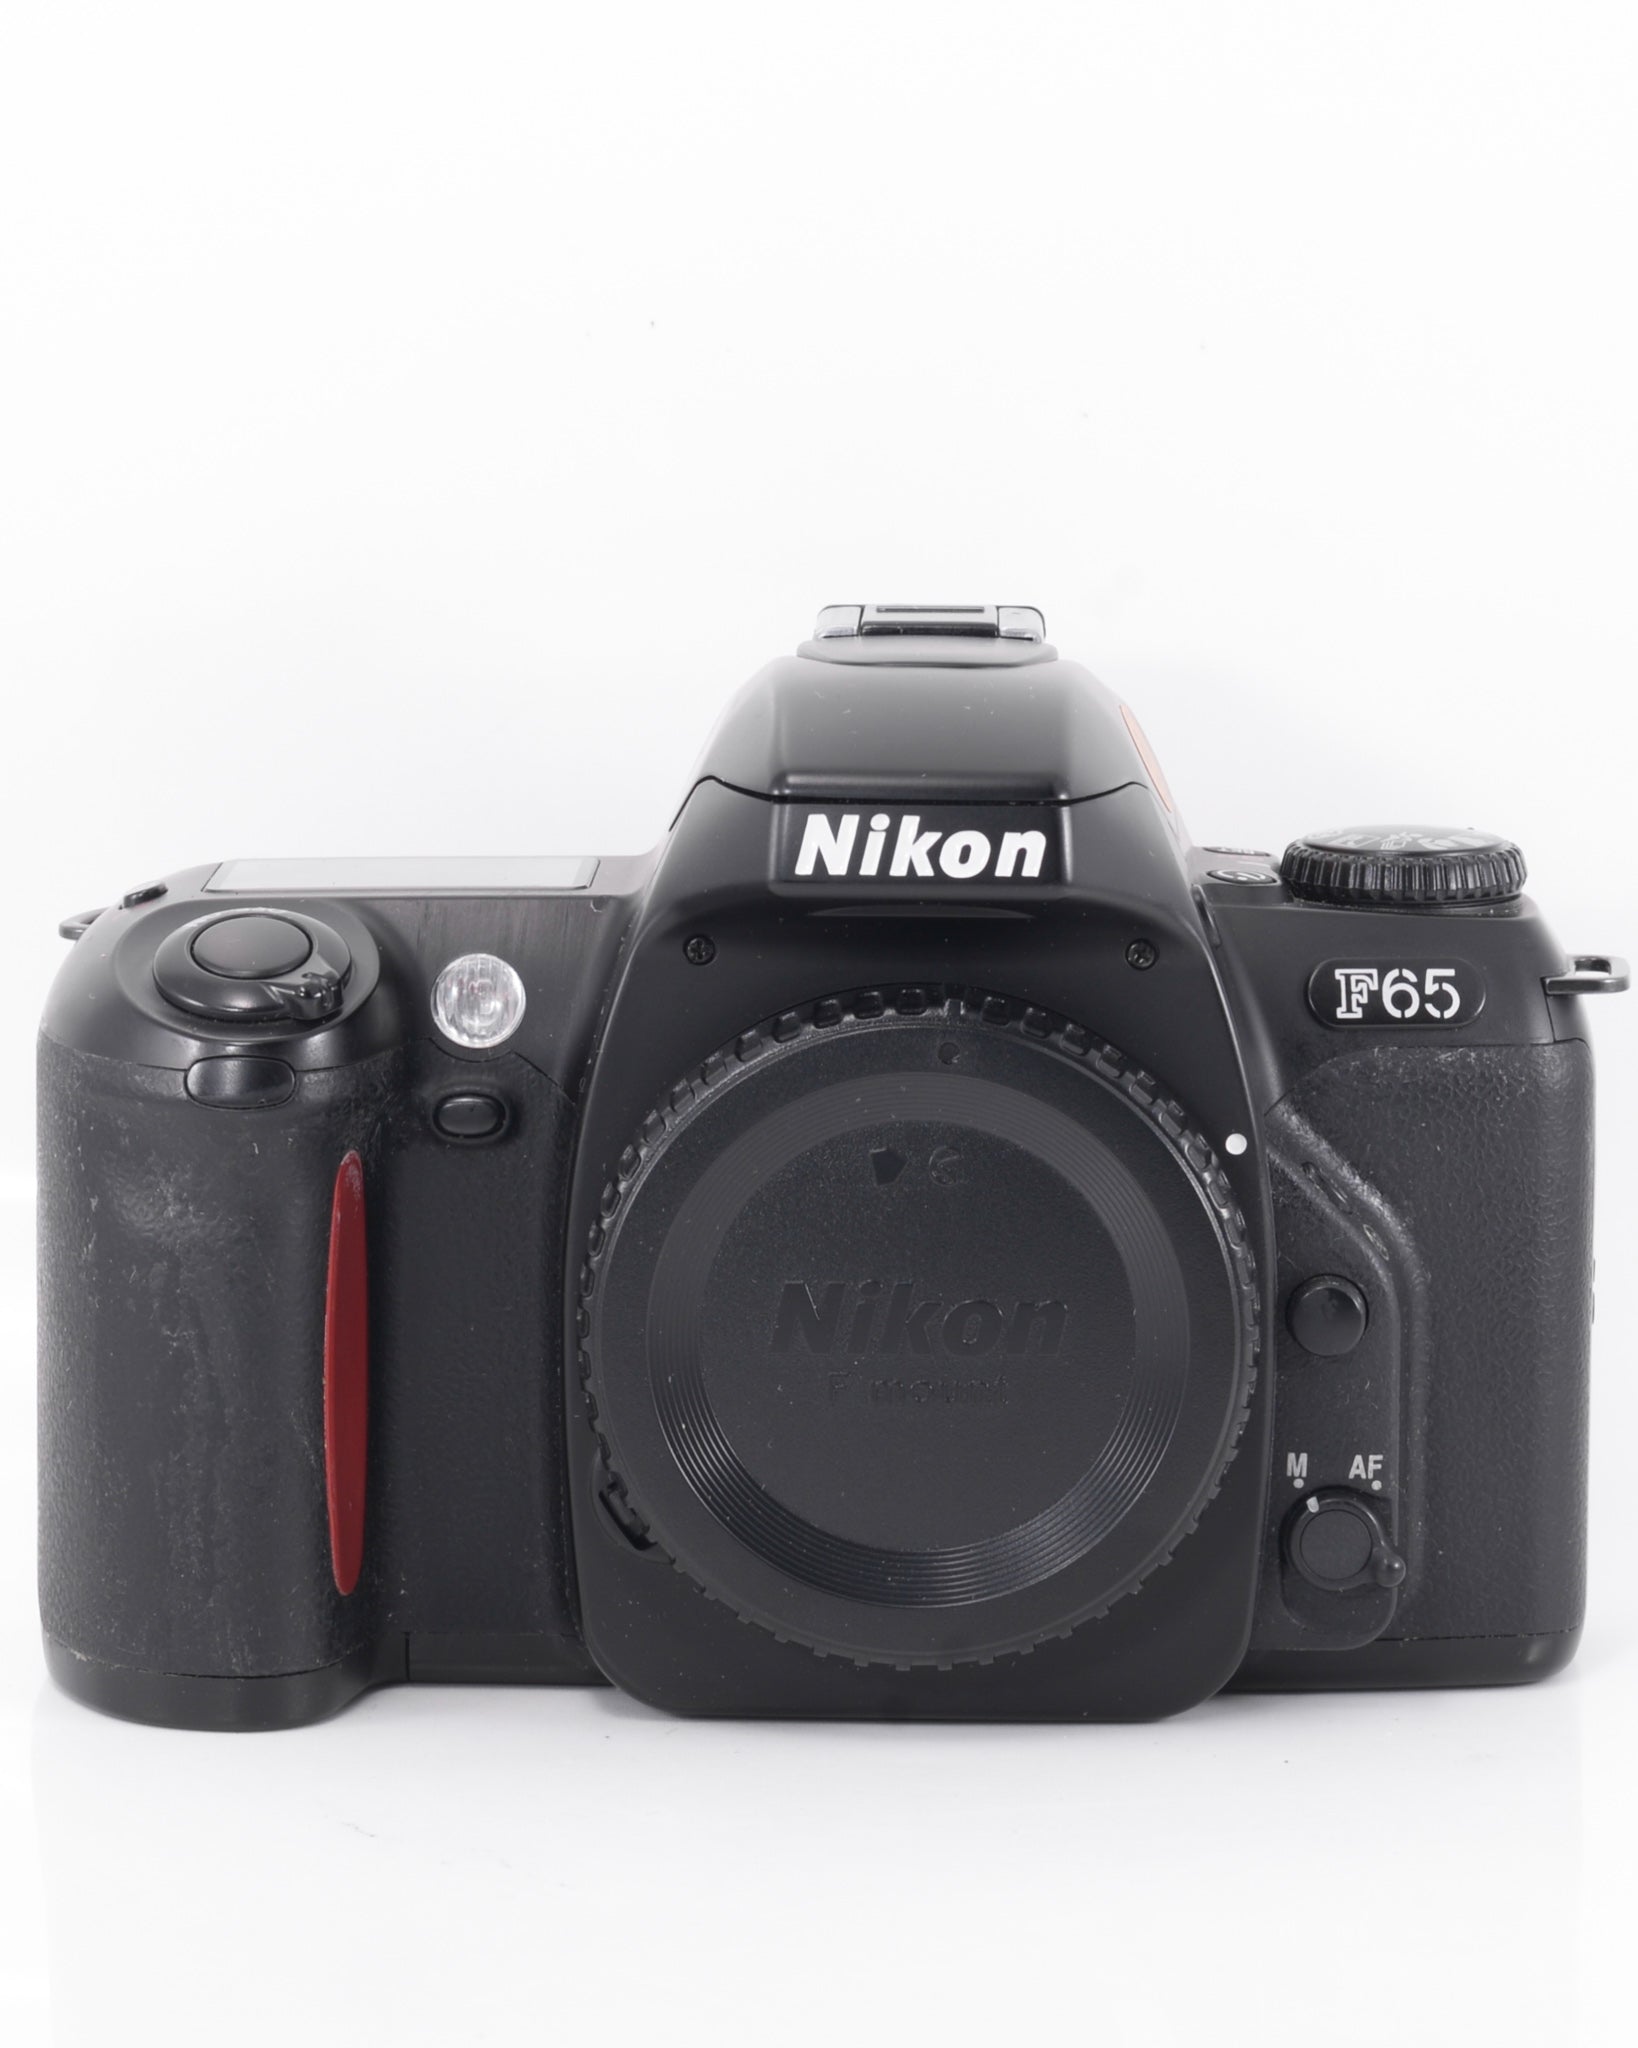 Nikon F65 35mm SLR film camera body only